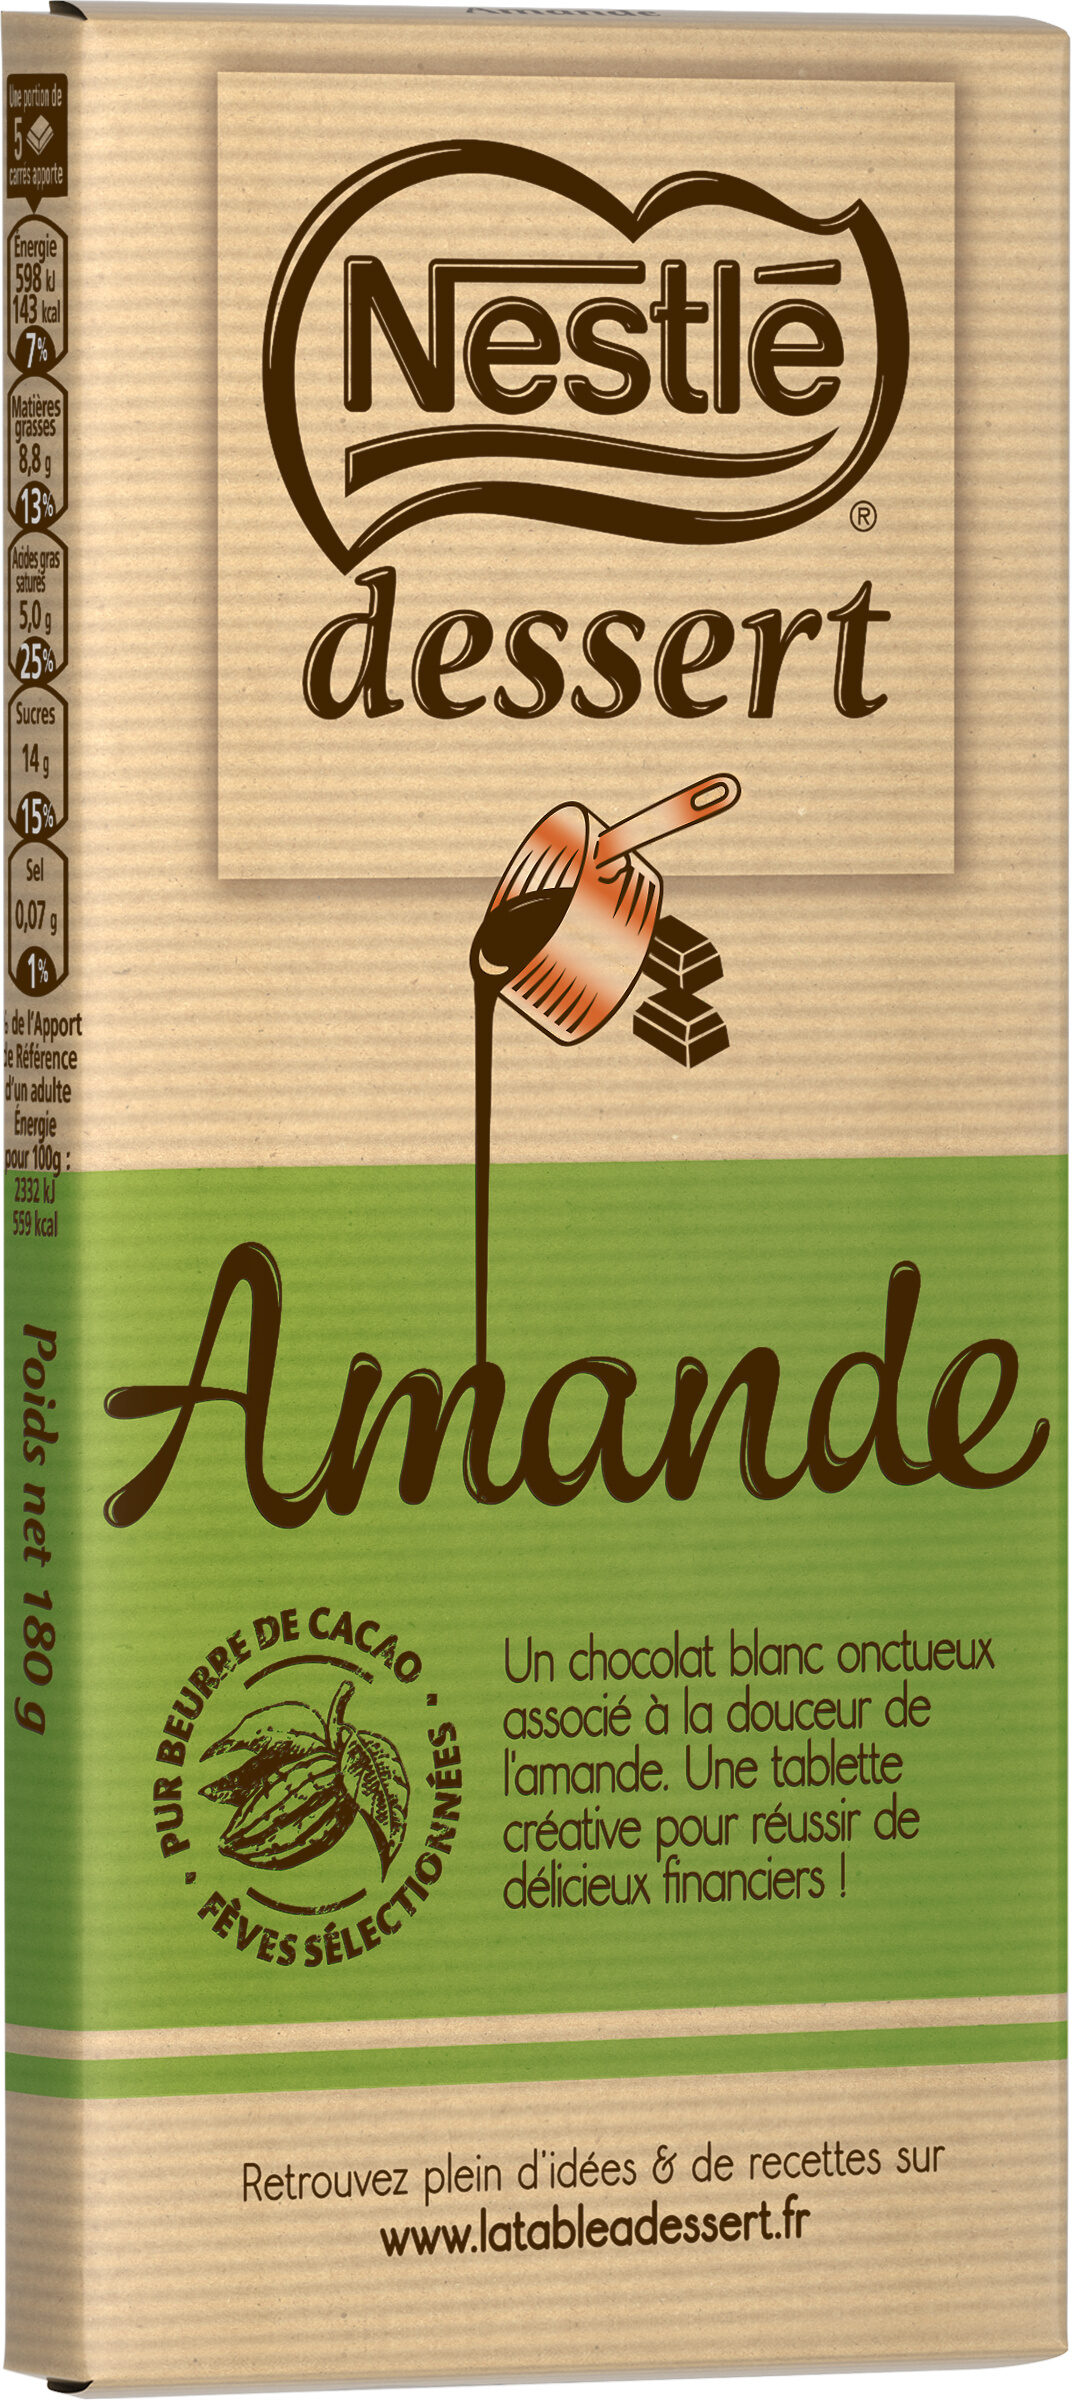 NESTLE DESSERT Chocolat Blanc Amande - Produit